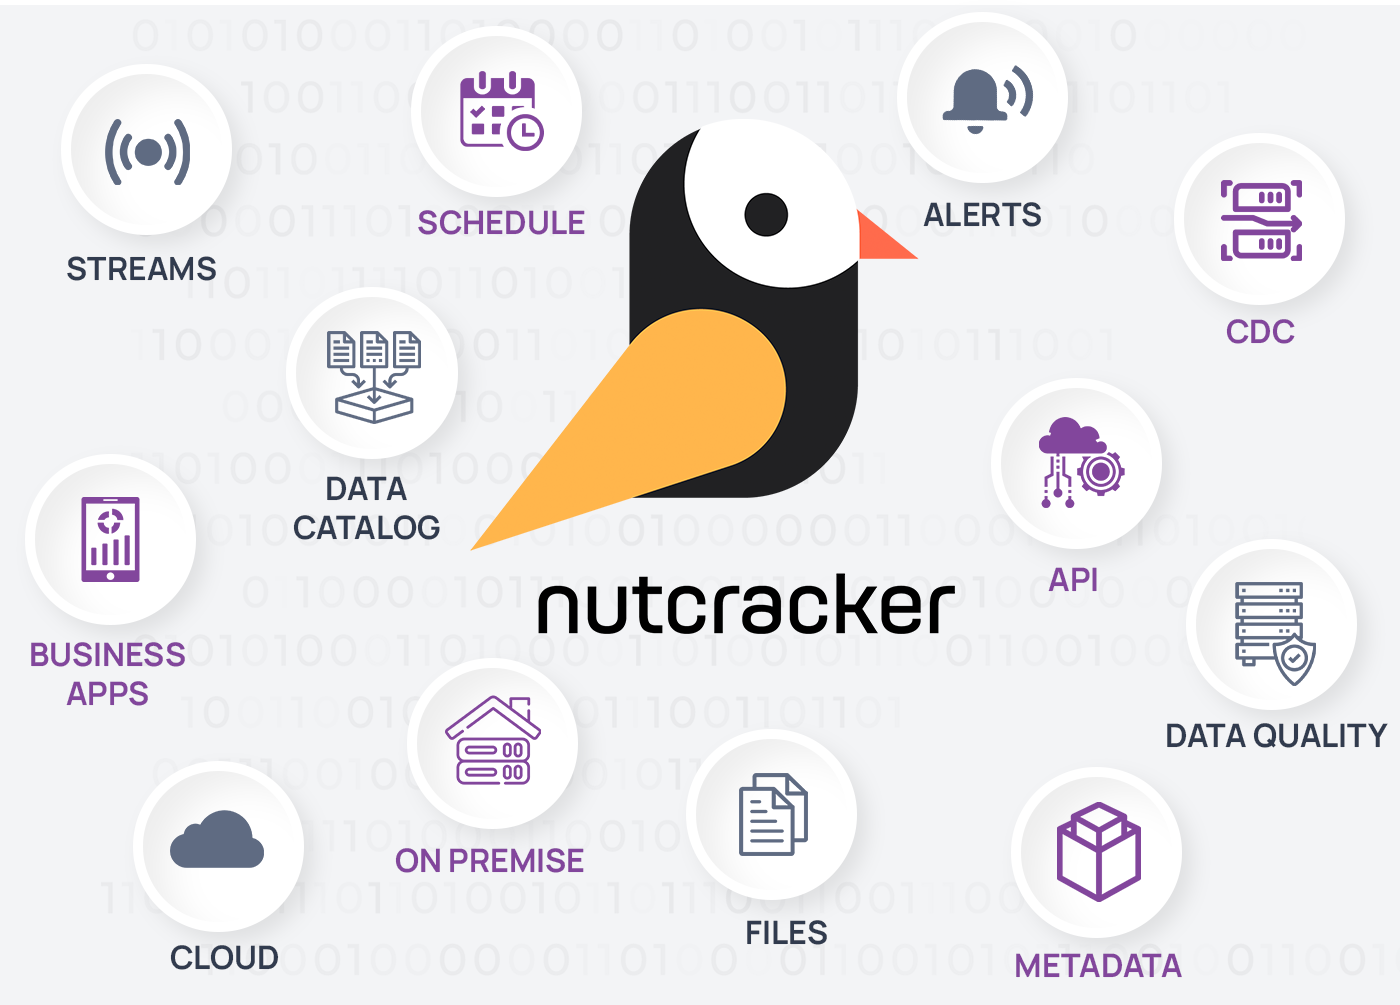 Nutcracker to simplify data pipelines